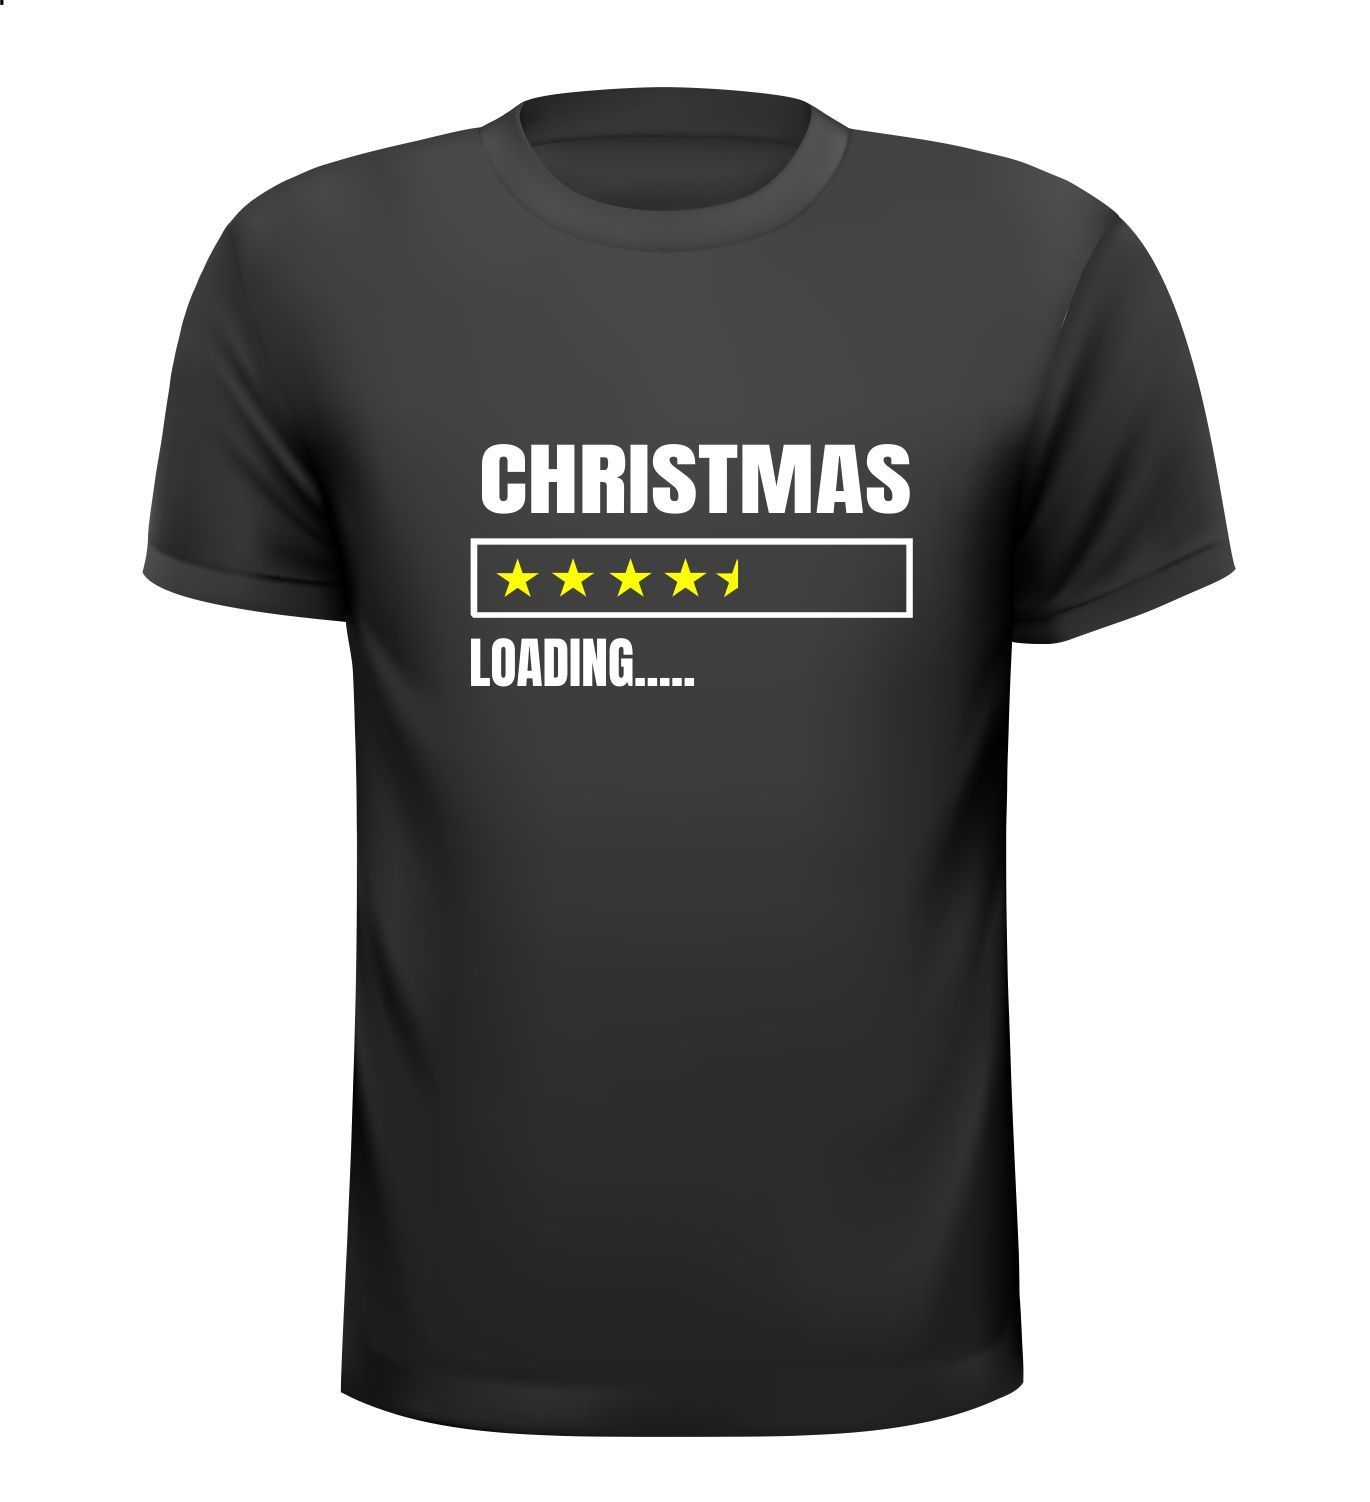 T-shirt Christmas is loading